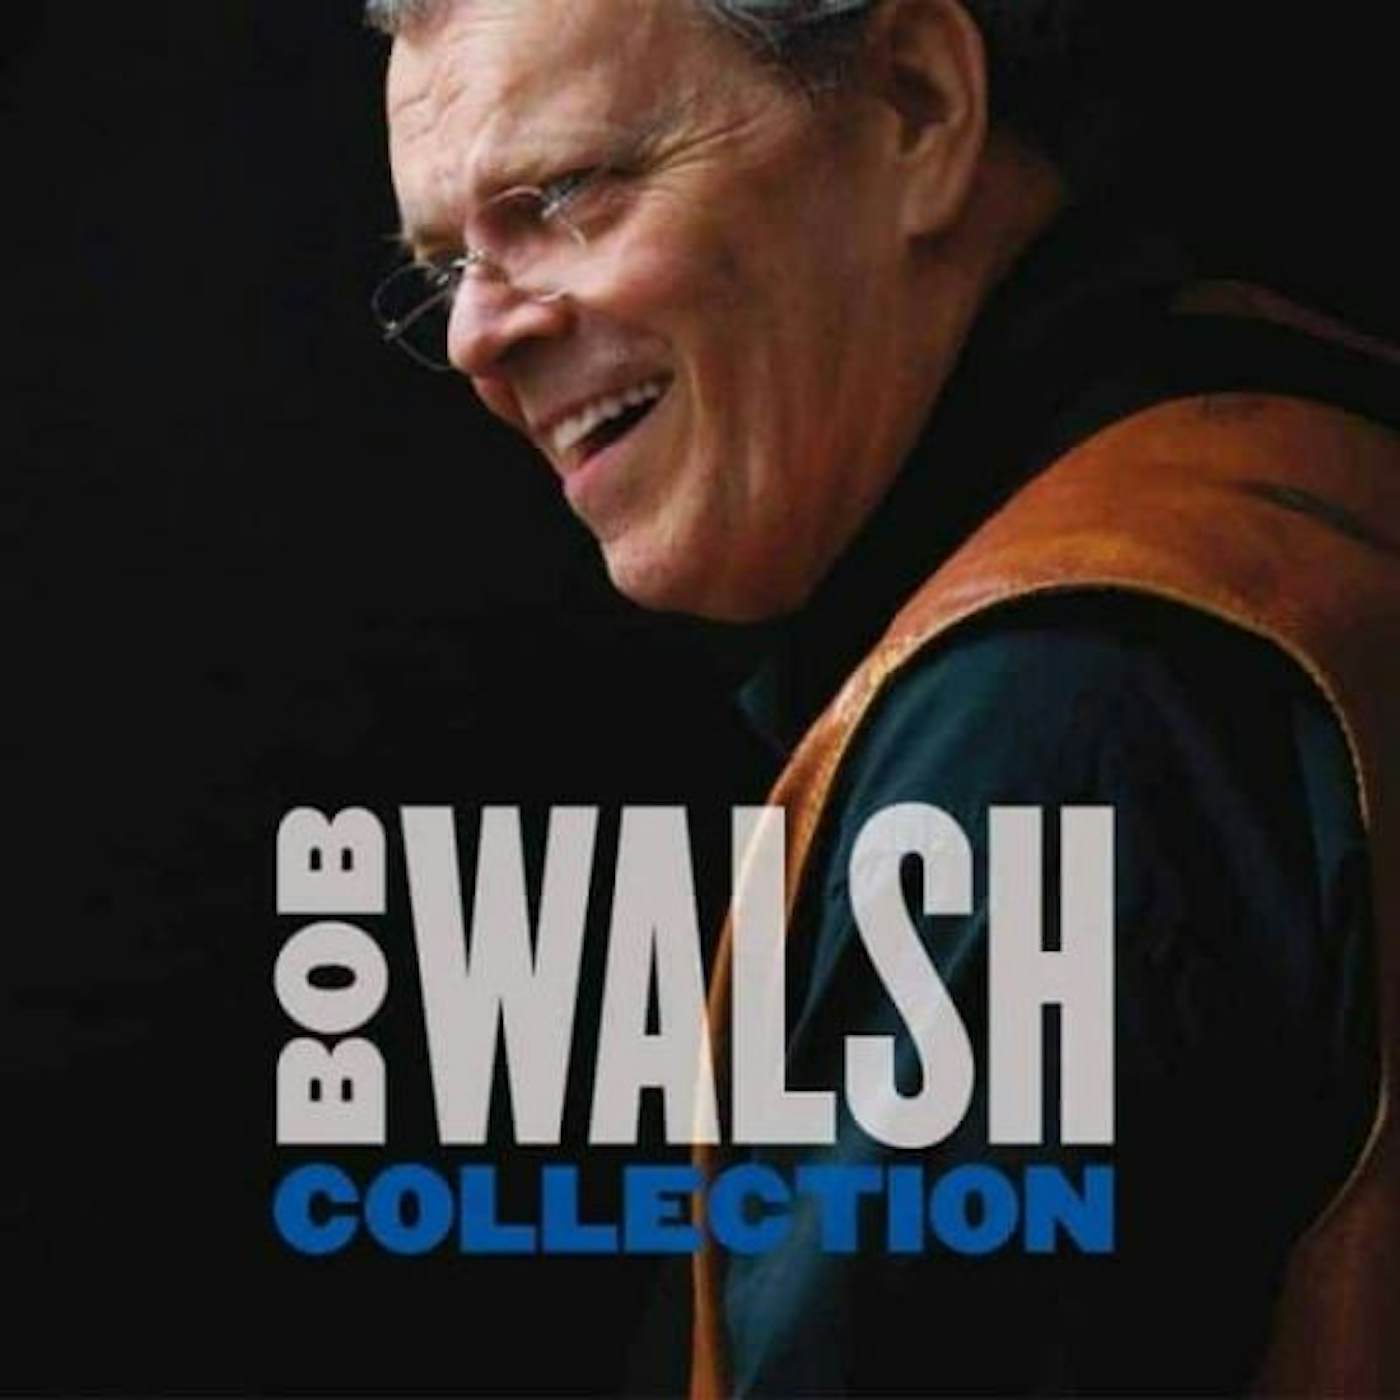 Bob Walsh COLLECTION Vinyl Record